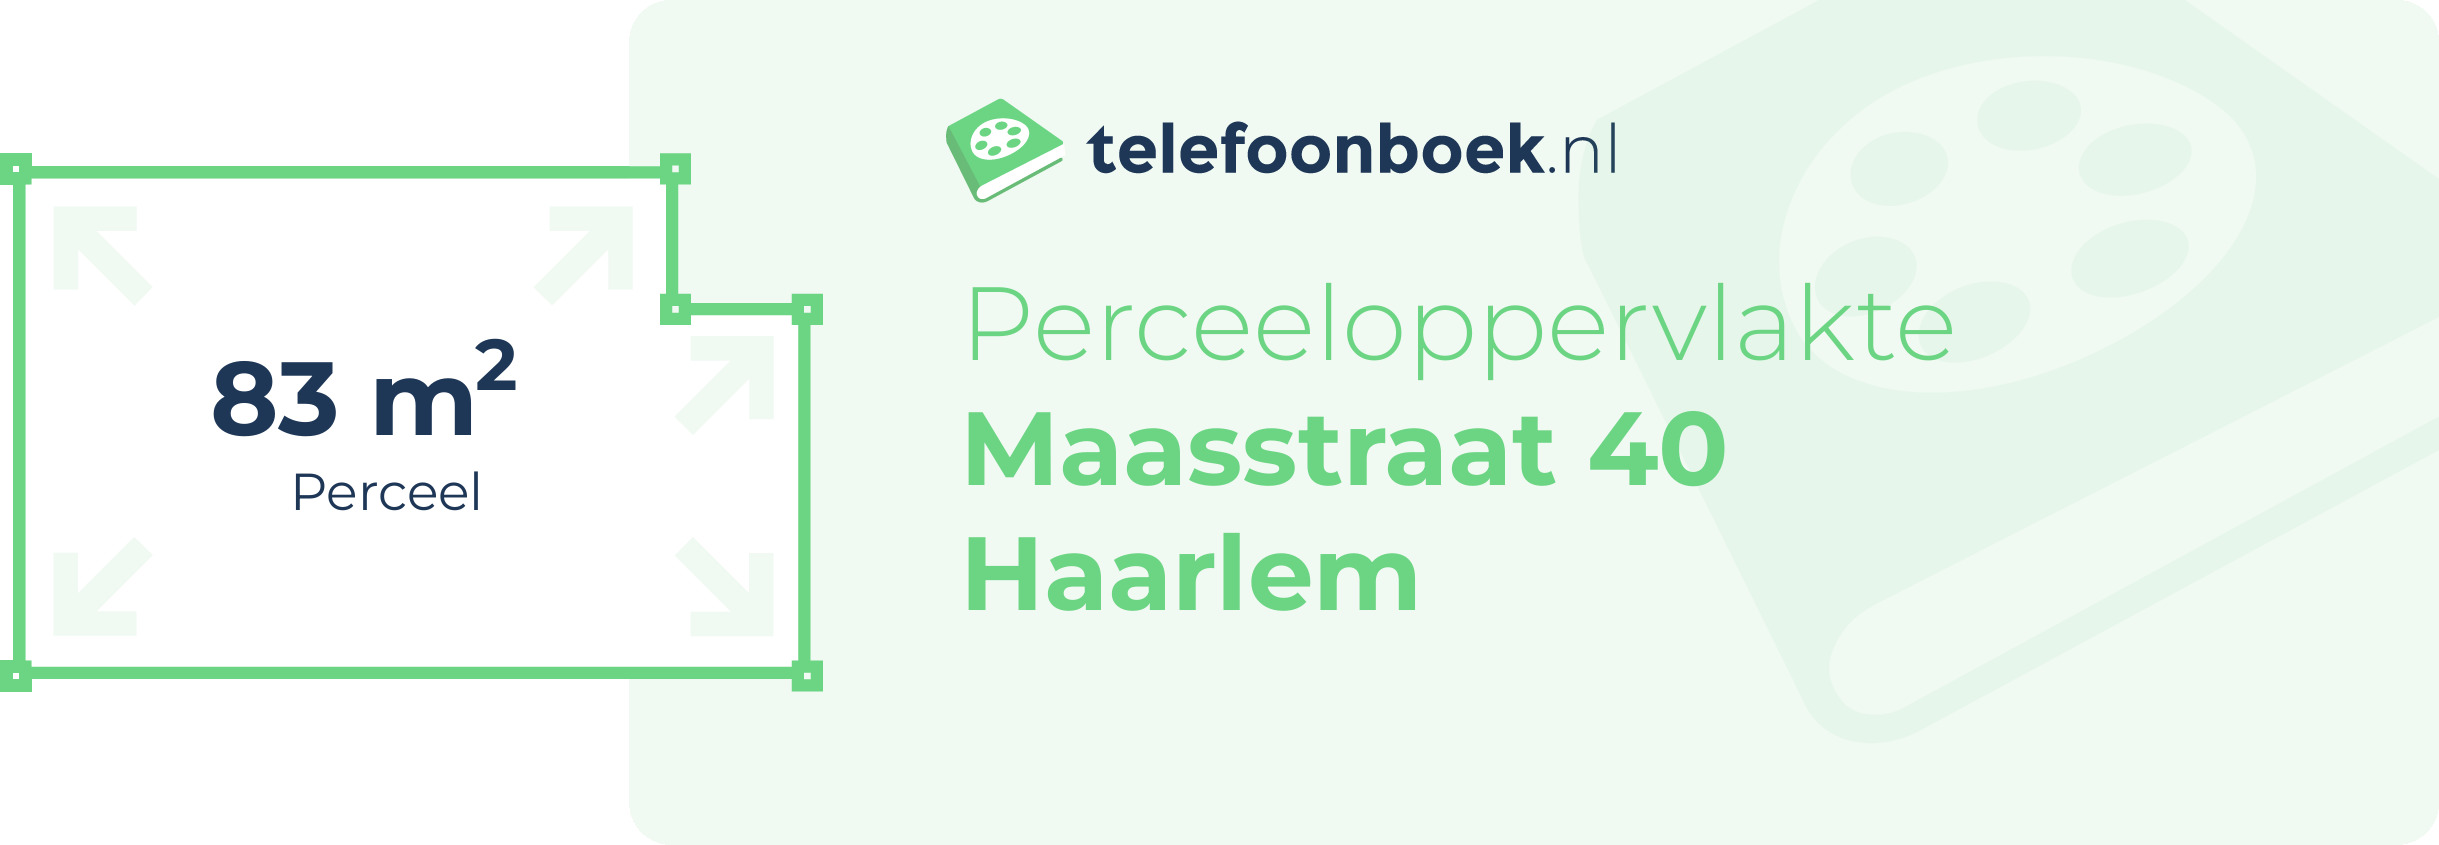 Perceeloppervlakte Maasstraat 40 Haarlem